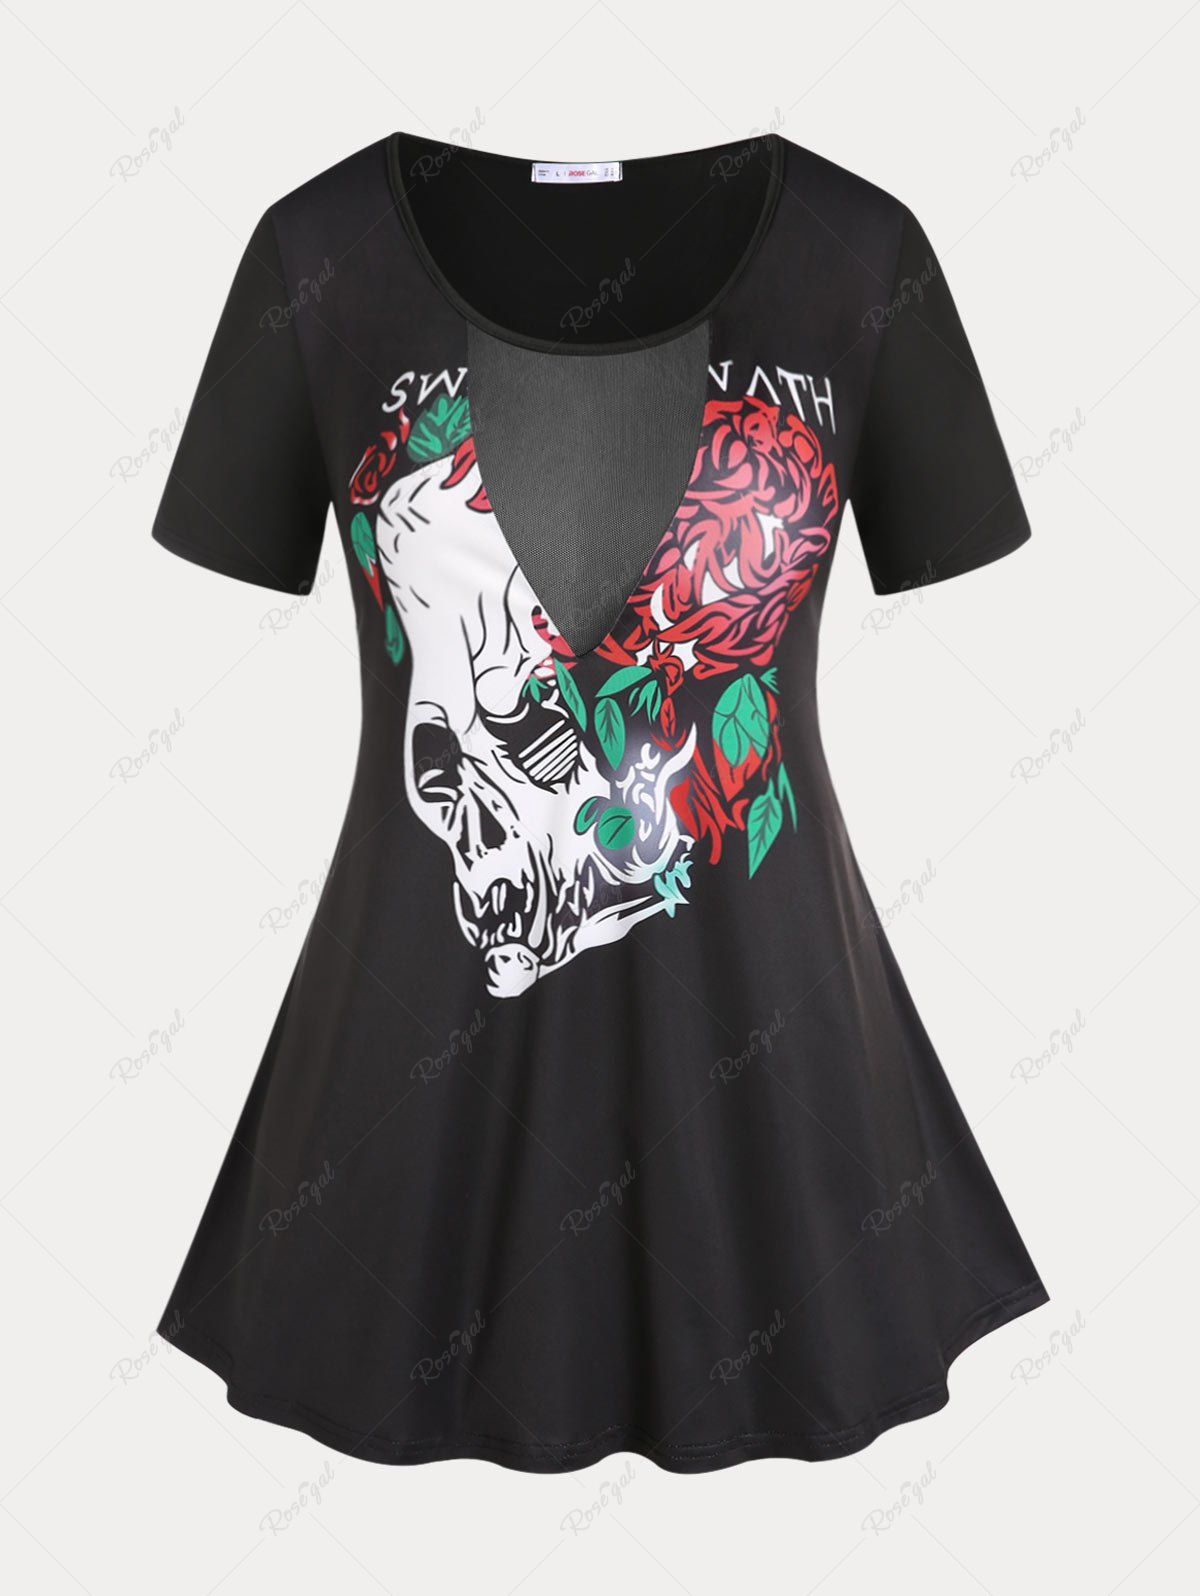 Hot Plus Size & Curve Mesh Panel Gothic Skulls Rose Graphic T Shirt  